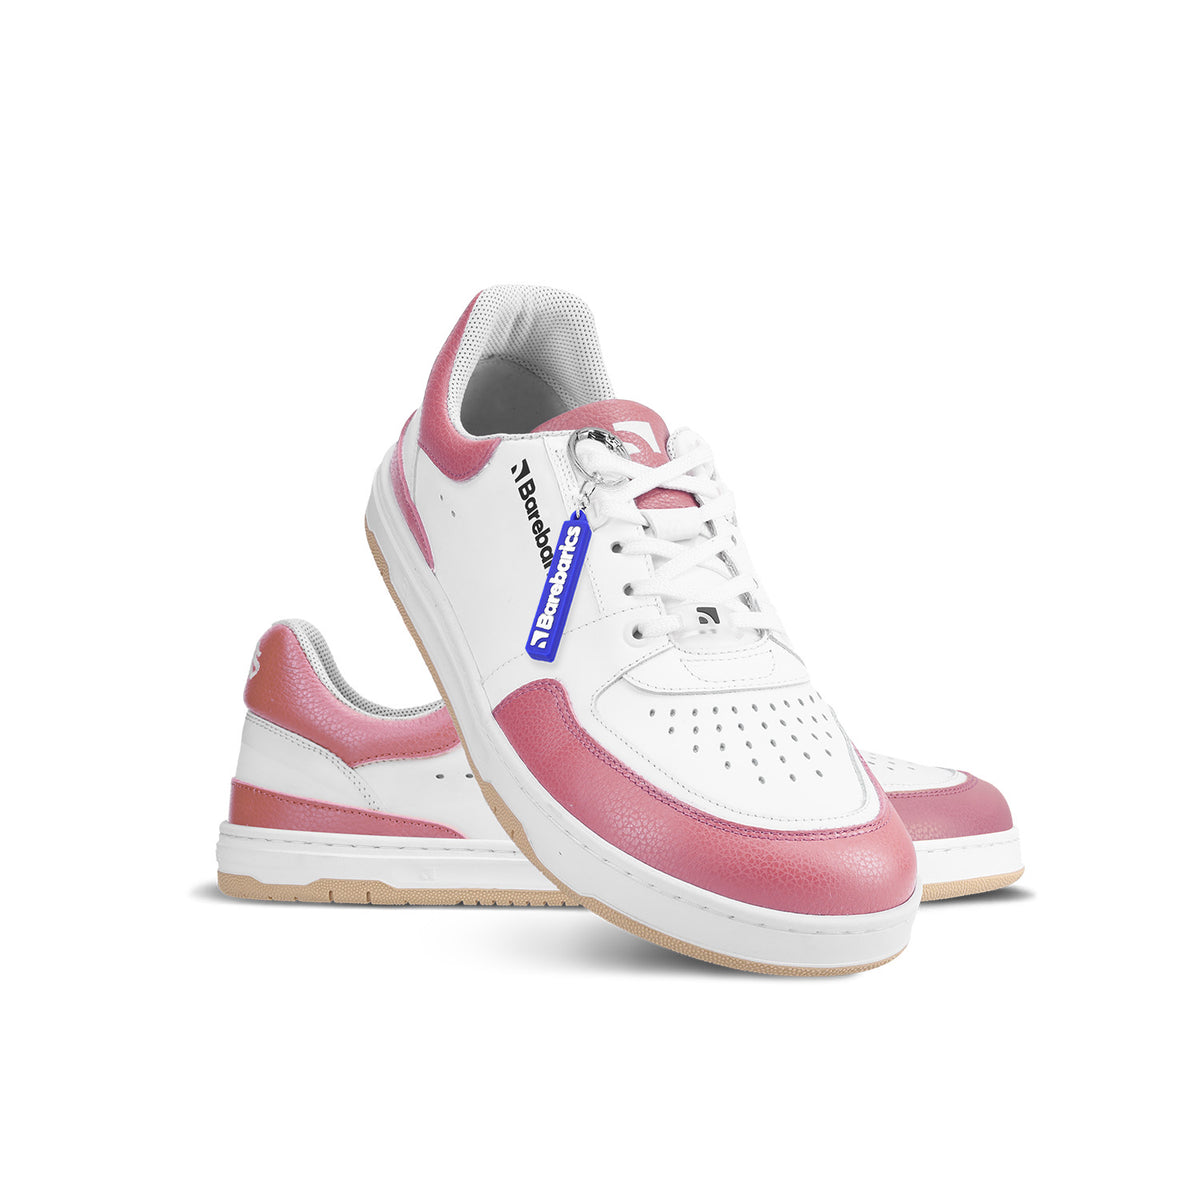 Barefoot Sneakers Barebarics Wave - White & BubbleGum Pink 2  - OzBarefoot